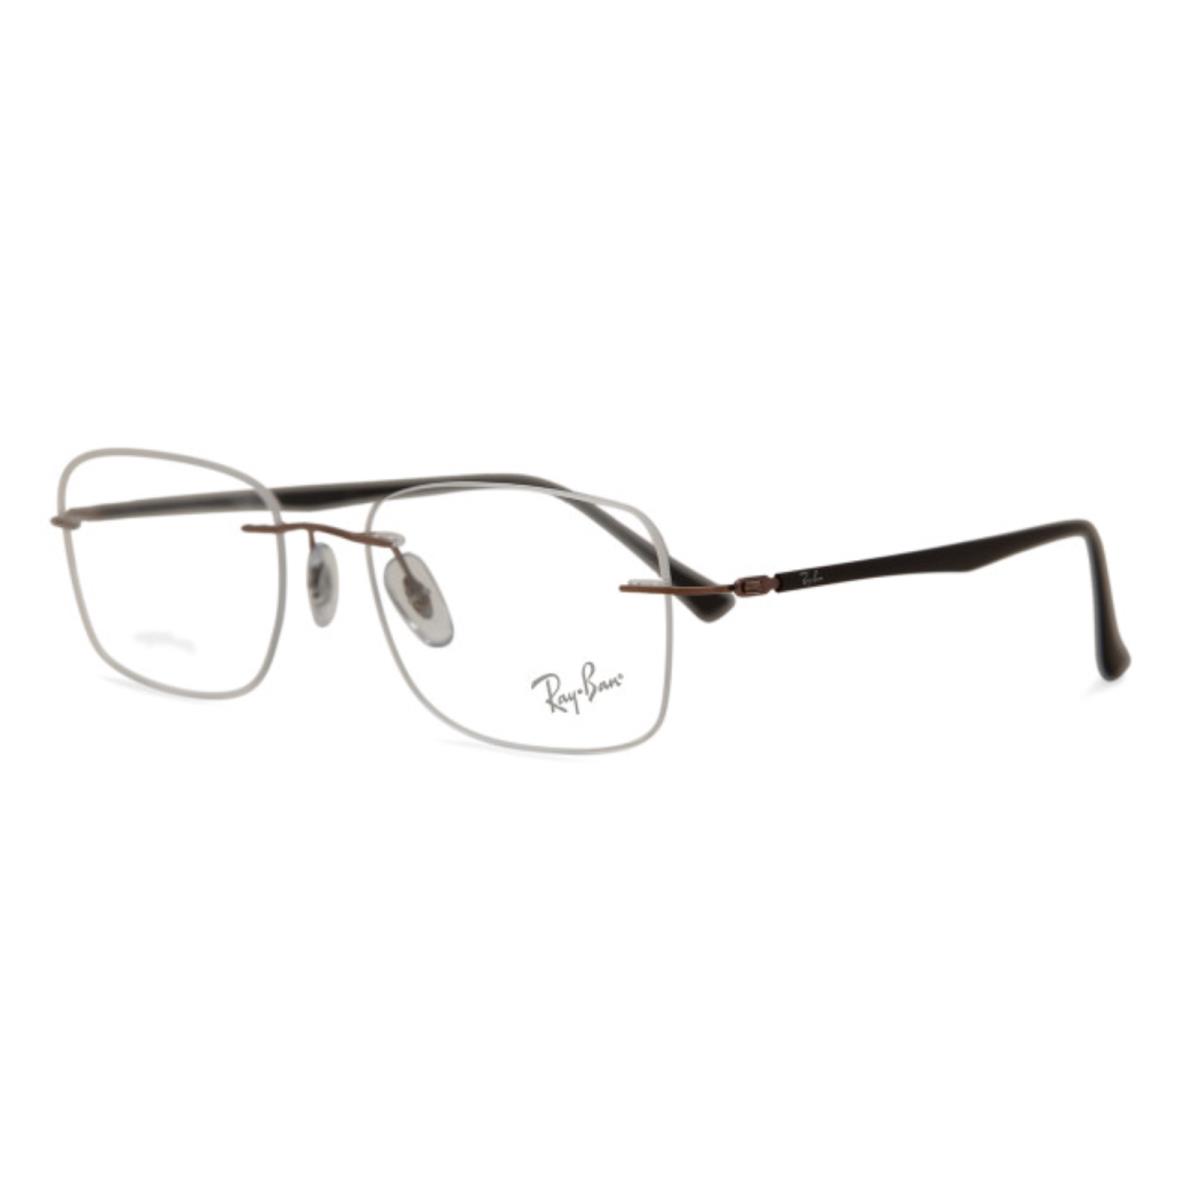 Ray-ban Liteforce Eyeglasses RB 8725 1131 52-17 145 Brown Bronze Rimless Frames